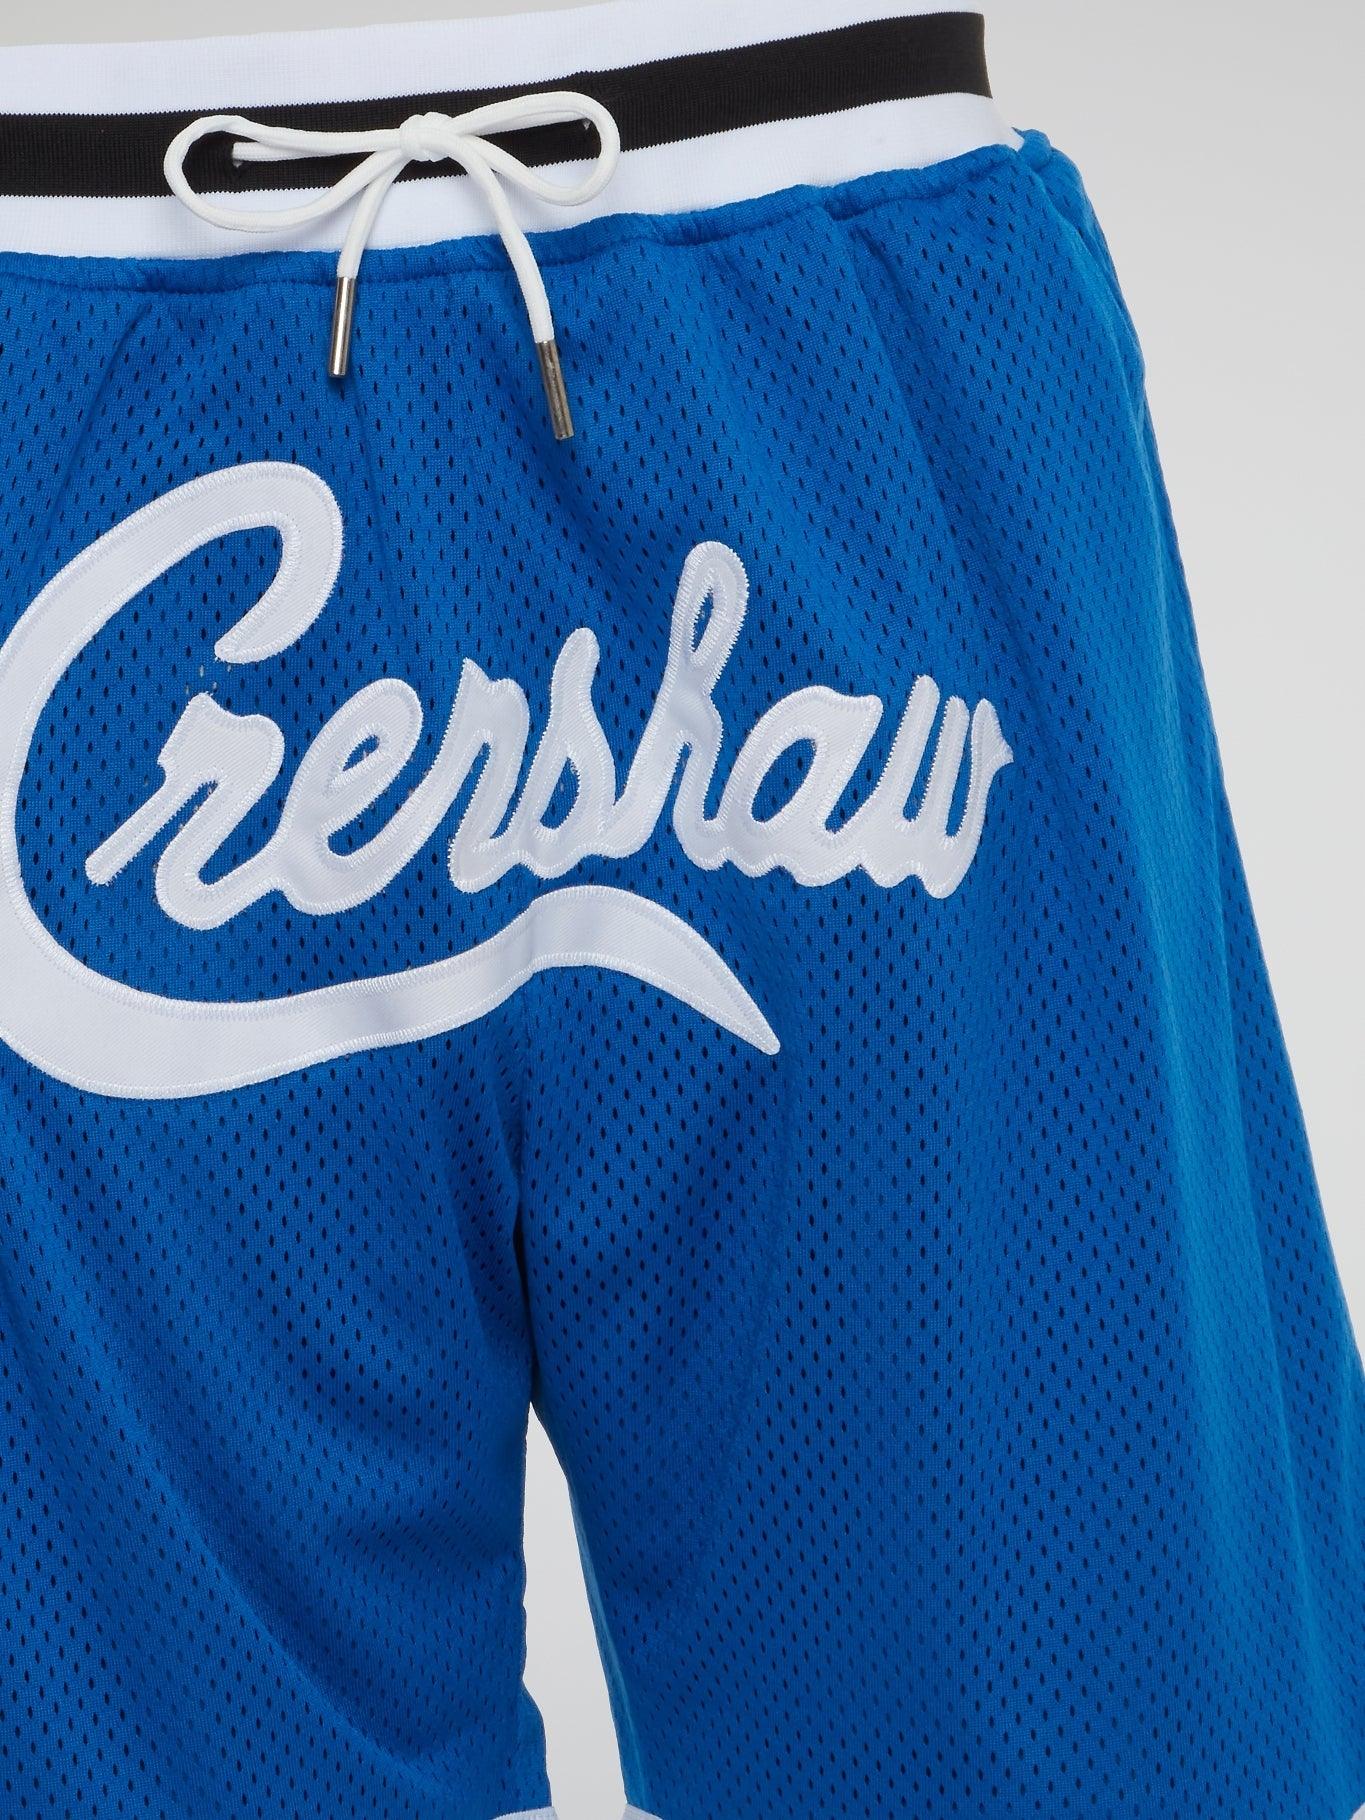 Crenshaw Blue Alt Shorts - B-Hype Society